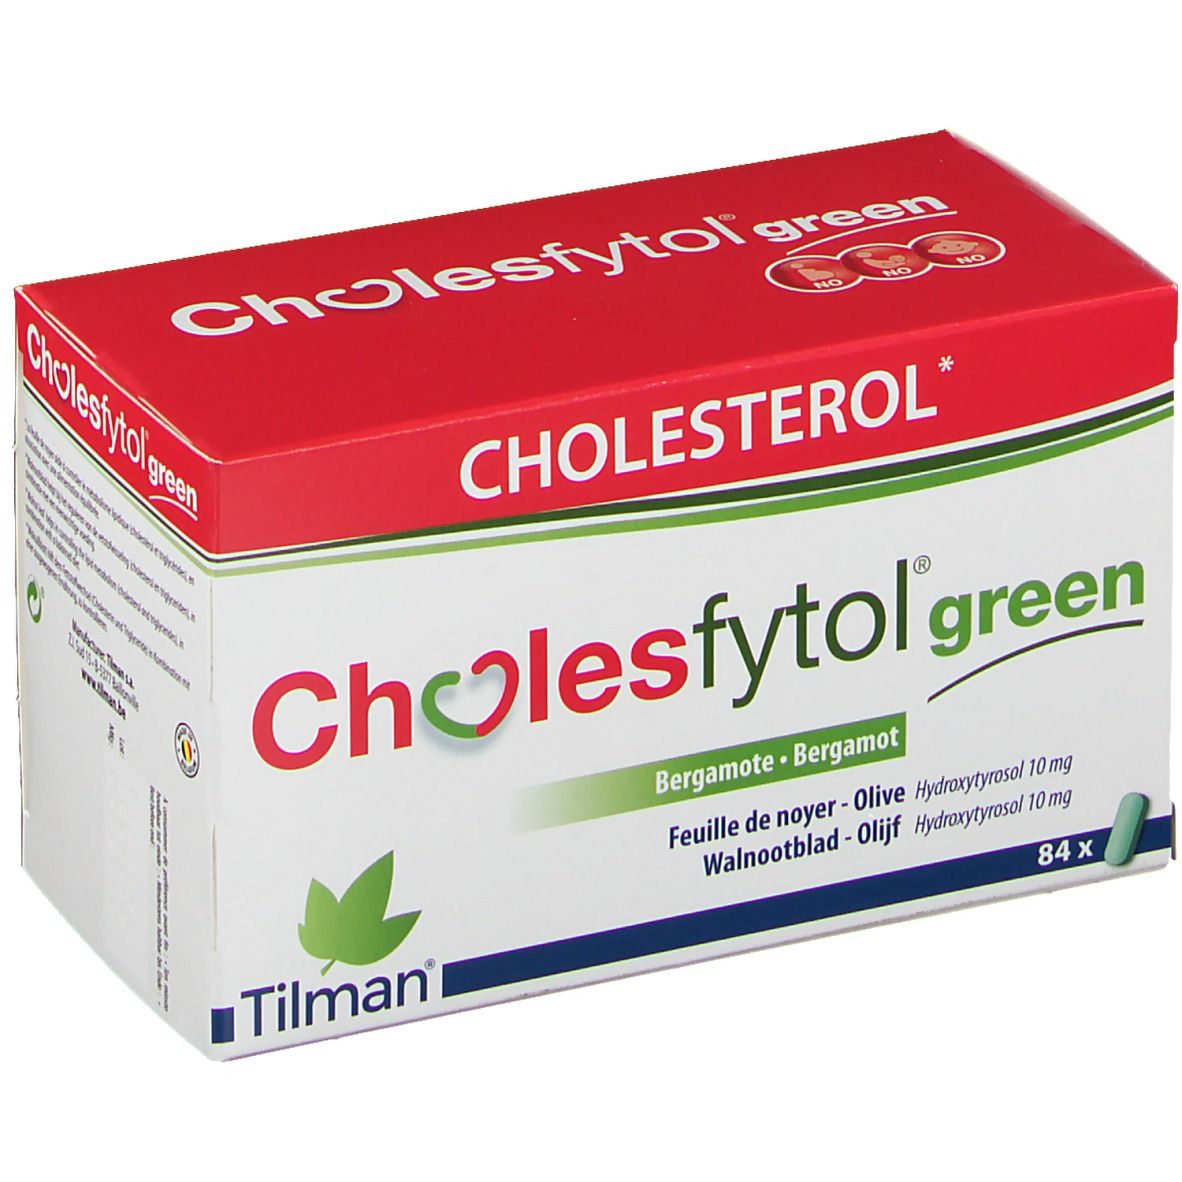 Tilman® Cholesfytol® green